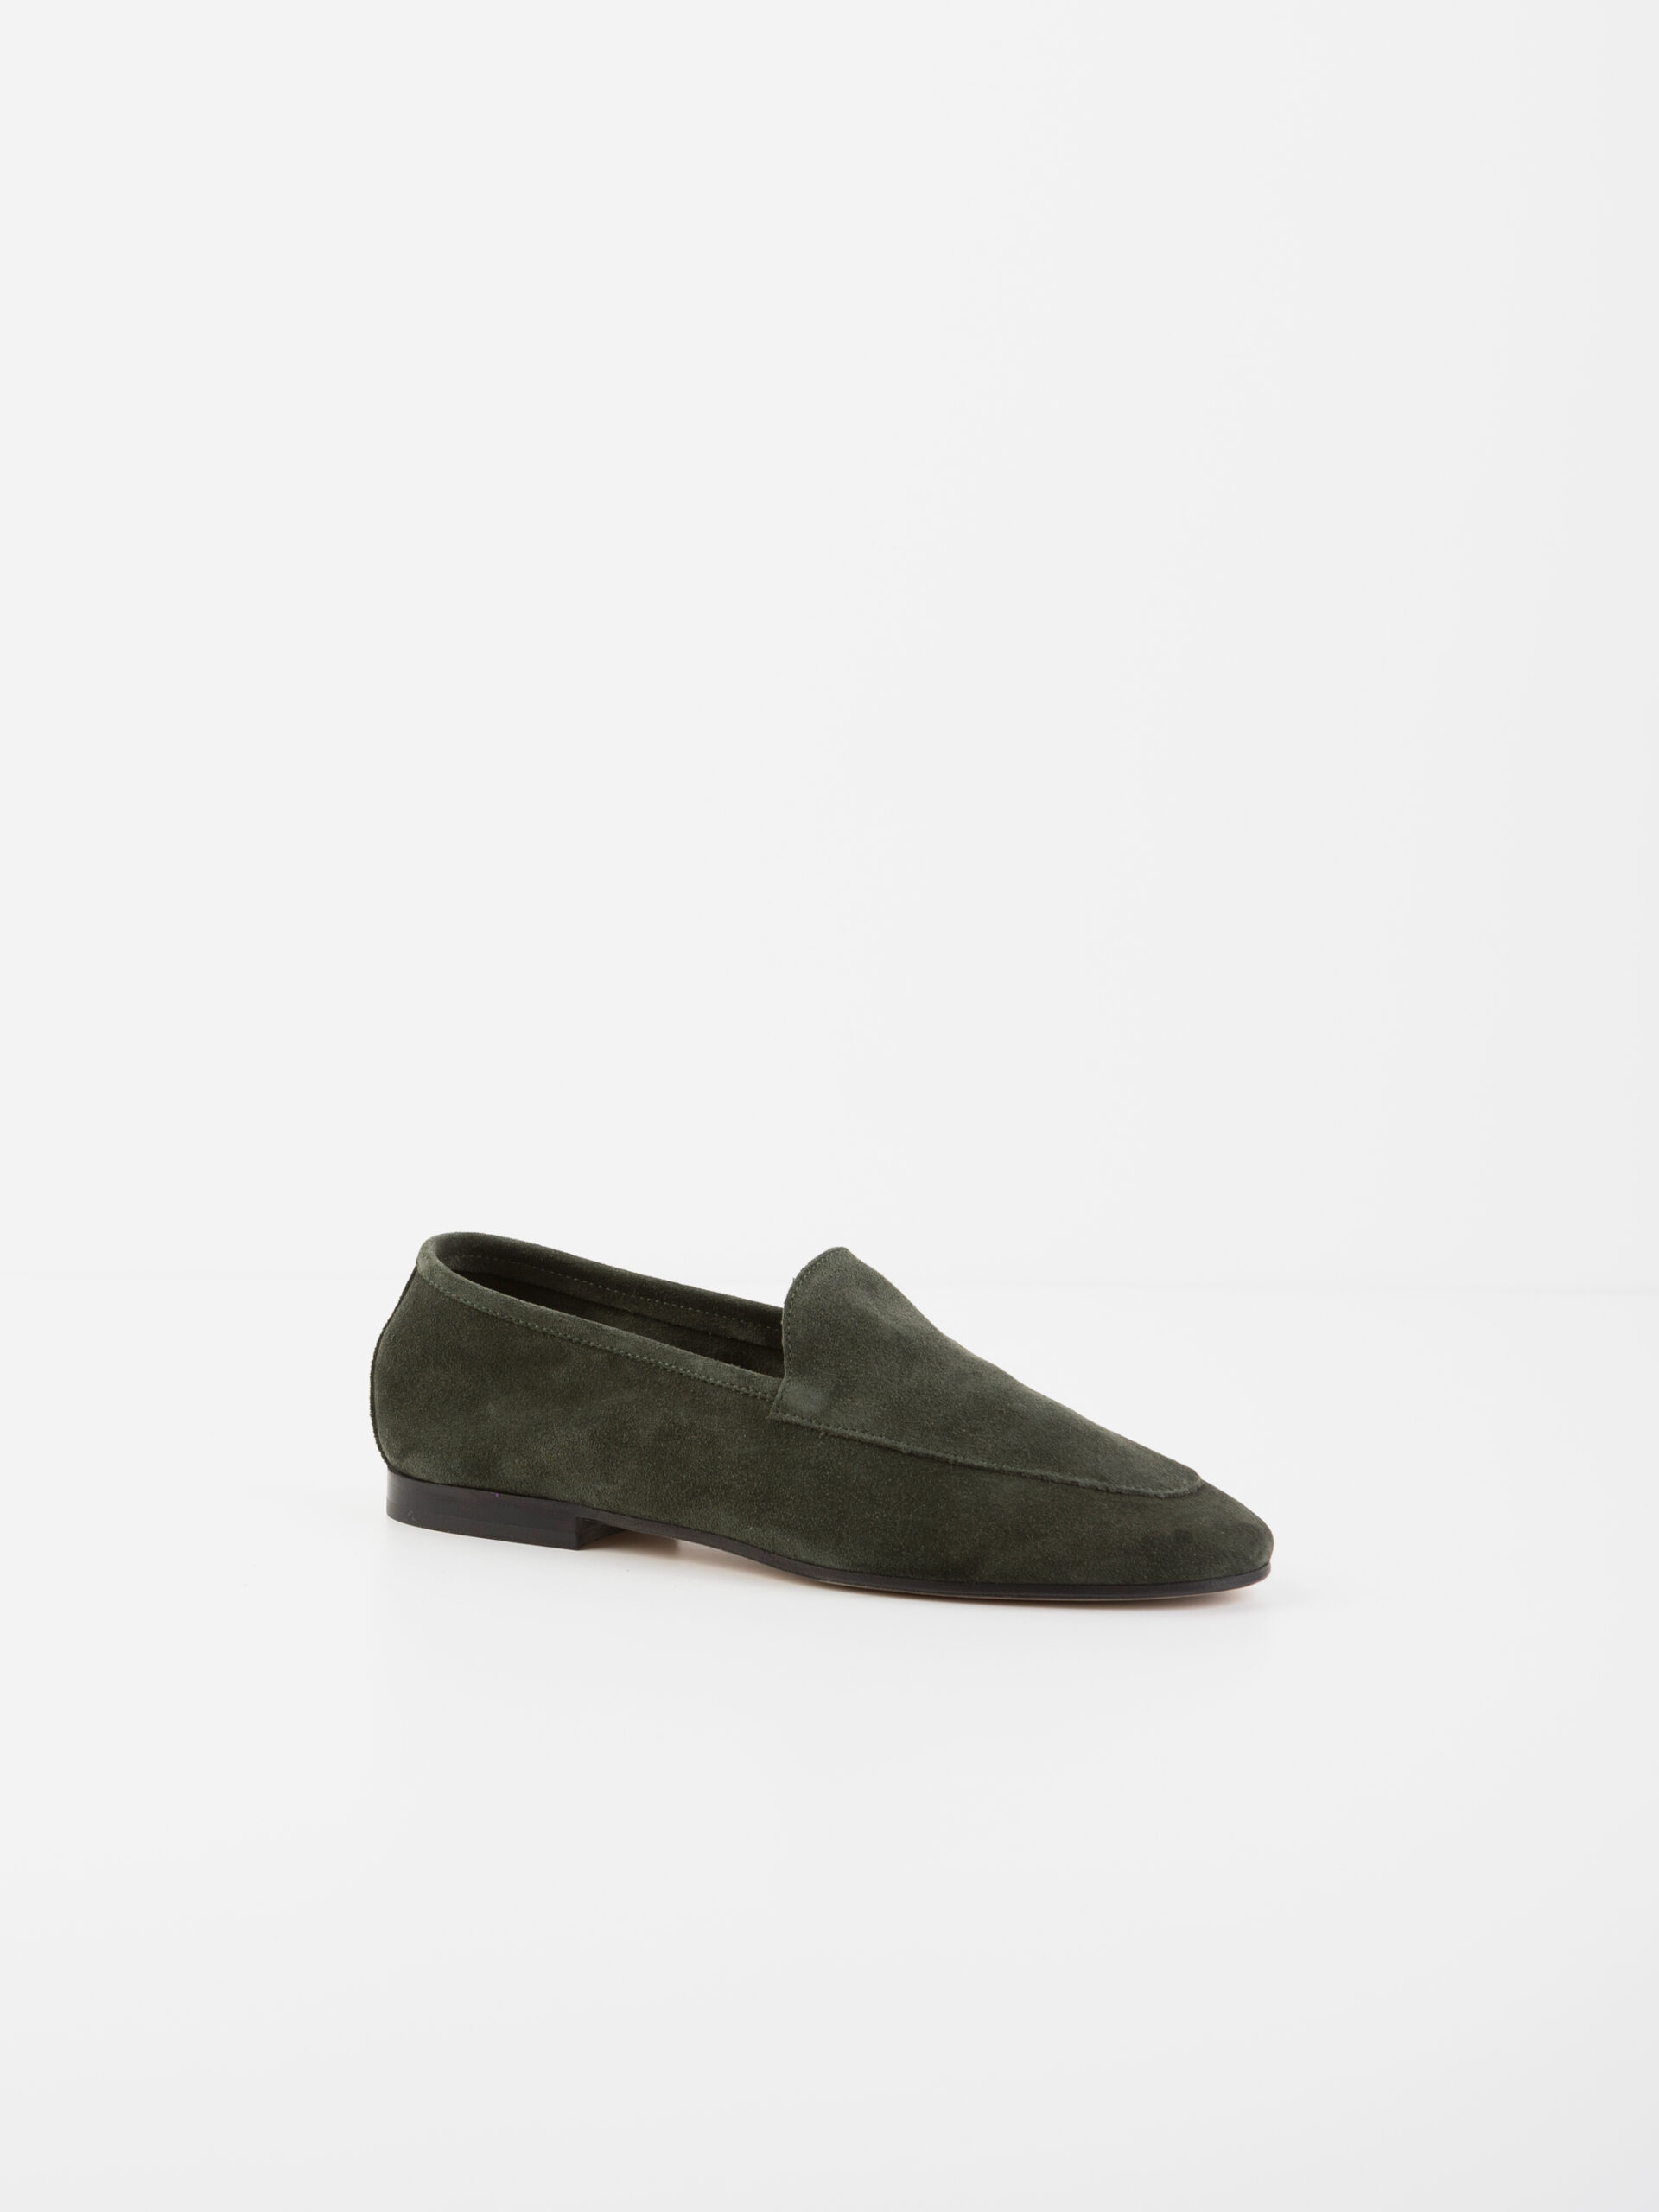 cashl-green-suede-loafers-leather-shoes-anniel-matchboxathens